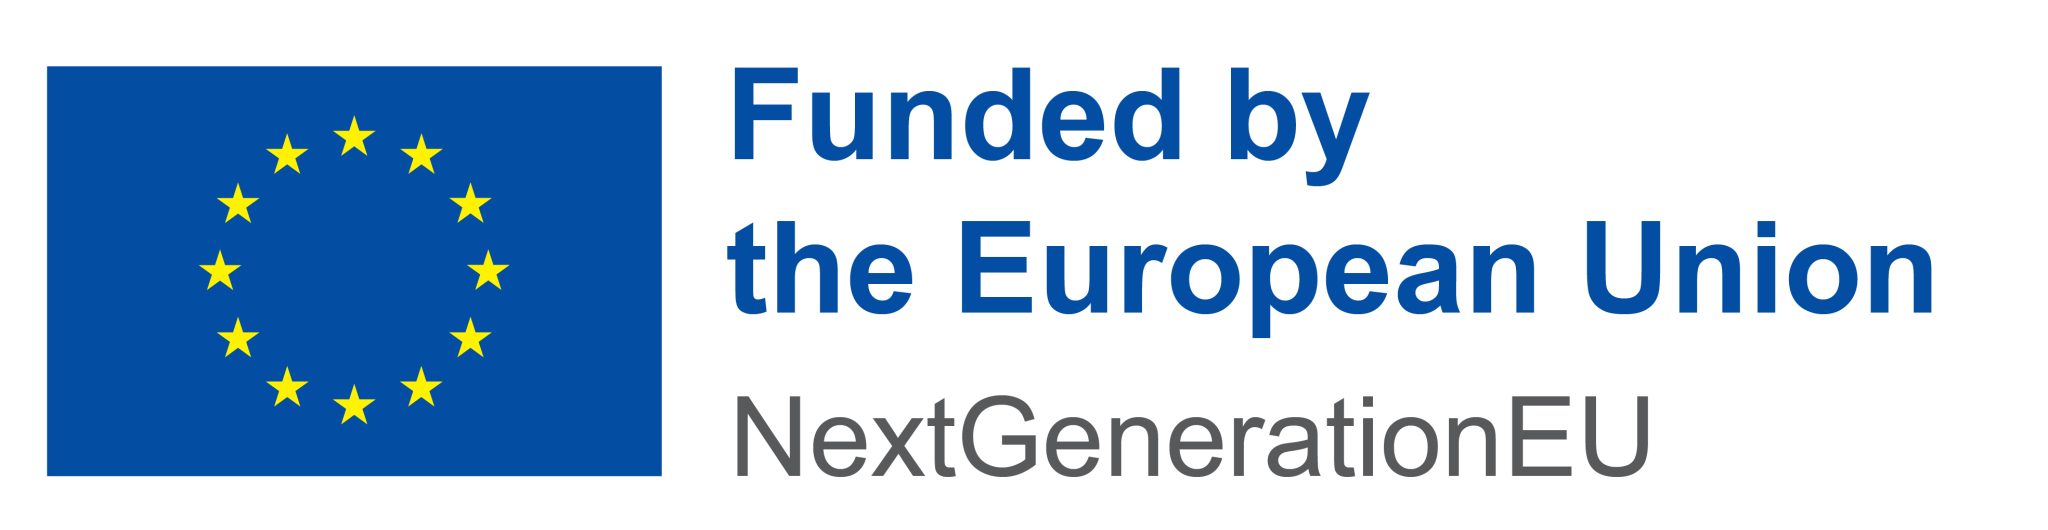 NextGenerationEU logo.